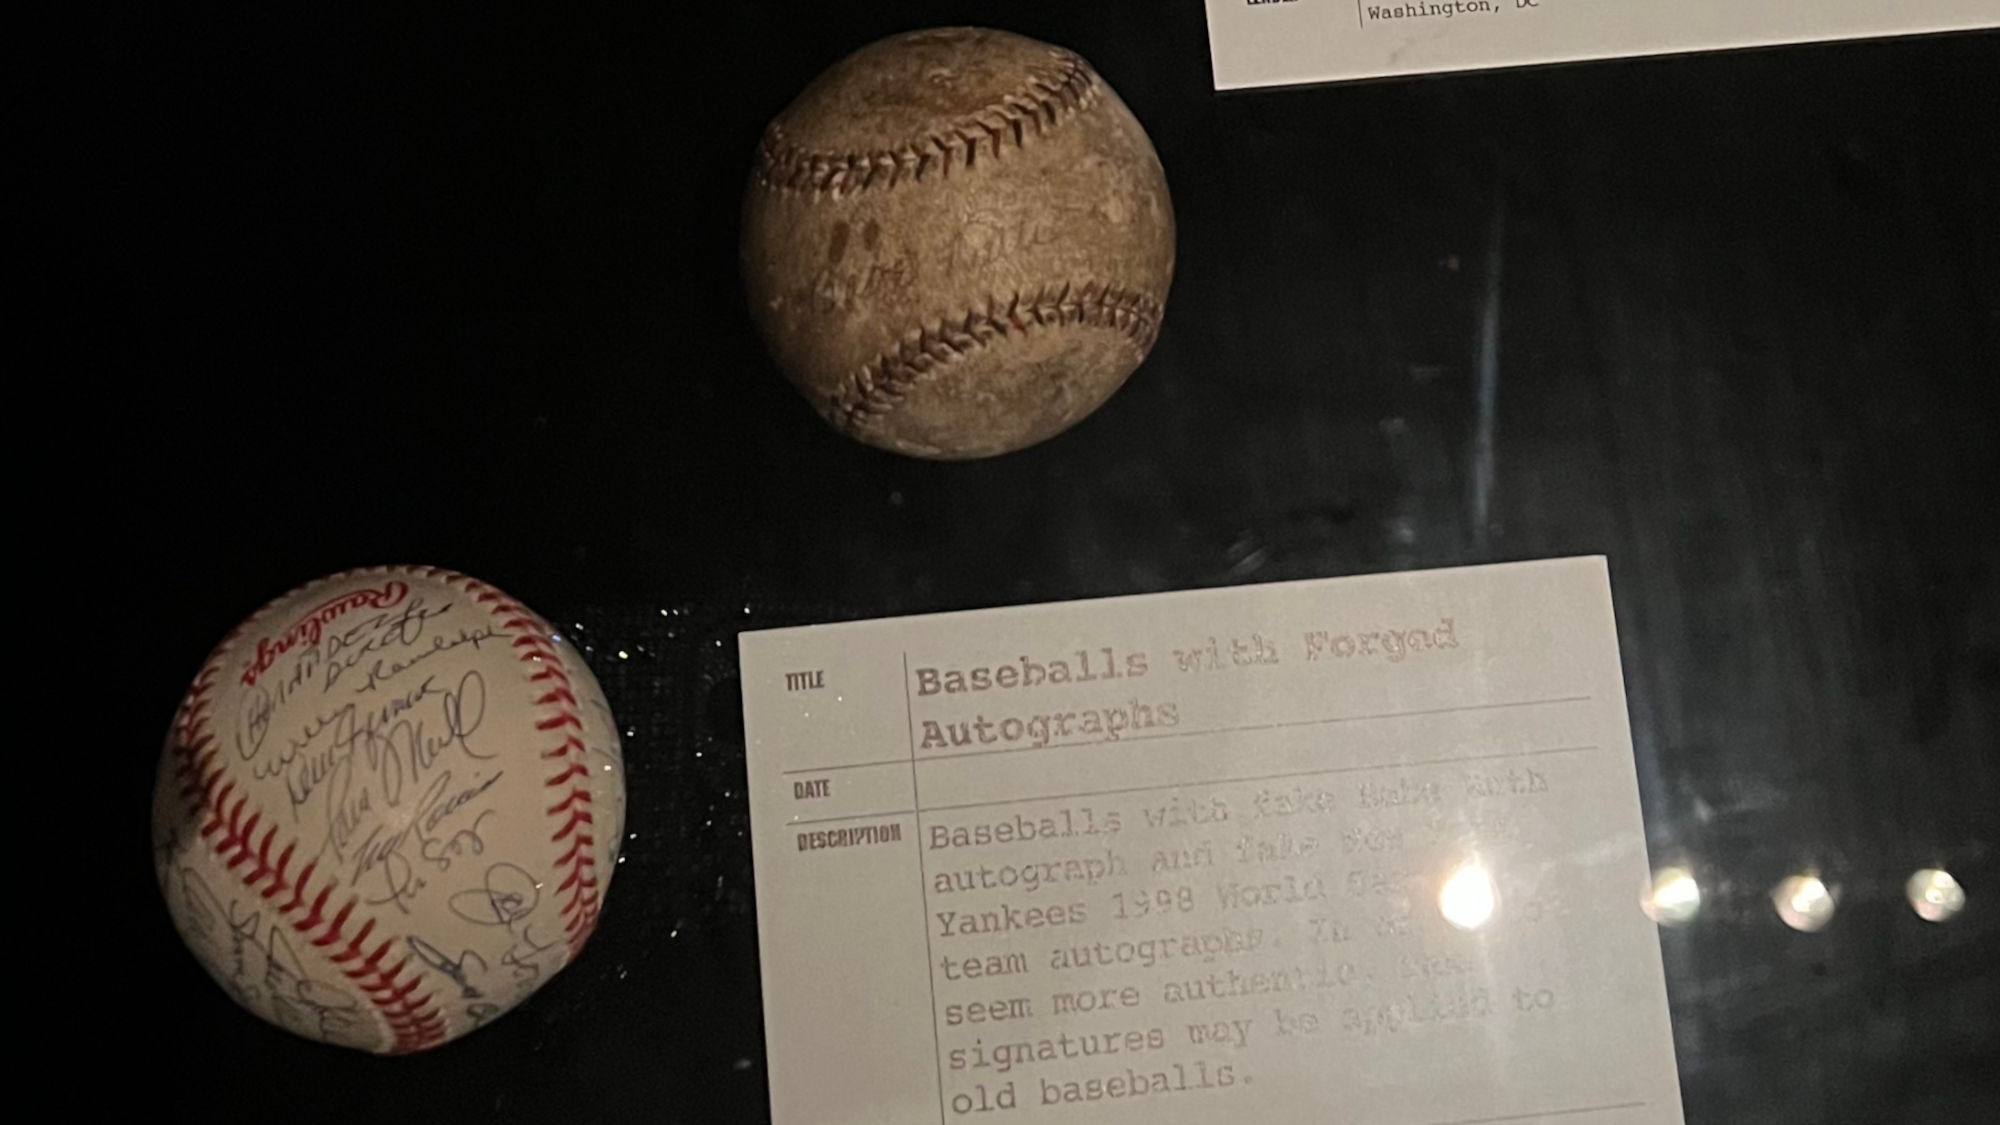 FBI Baseballs with Forged Autographs